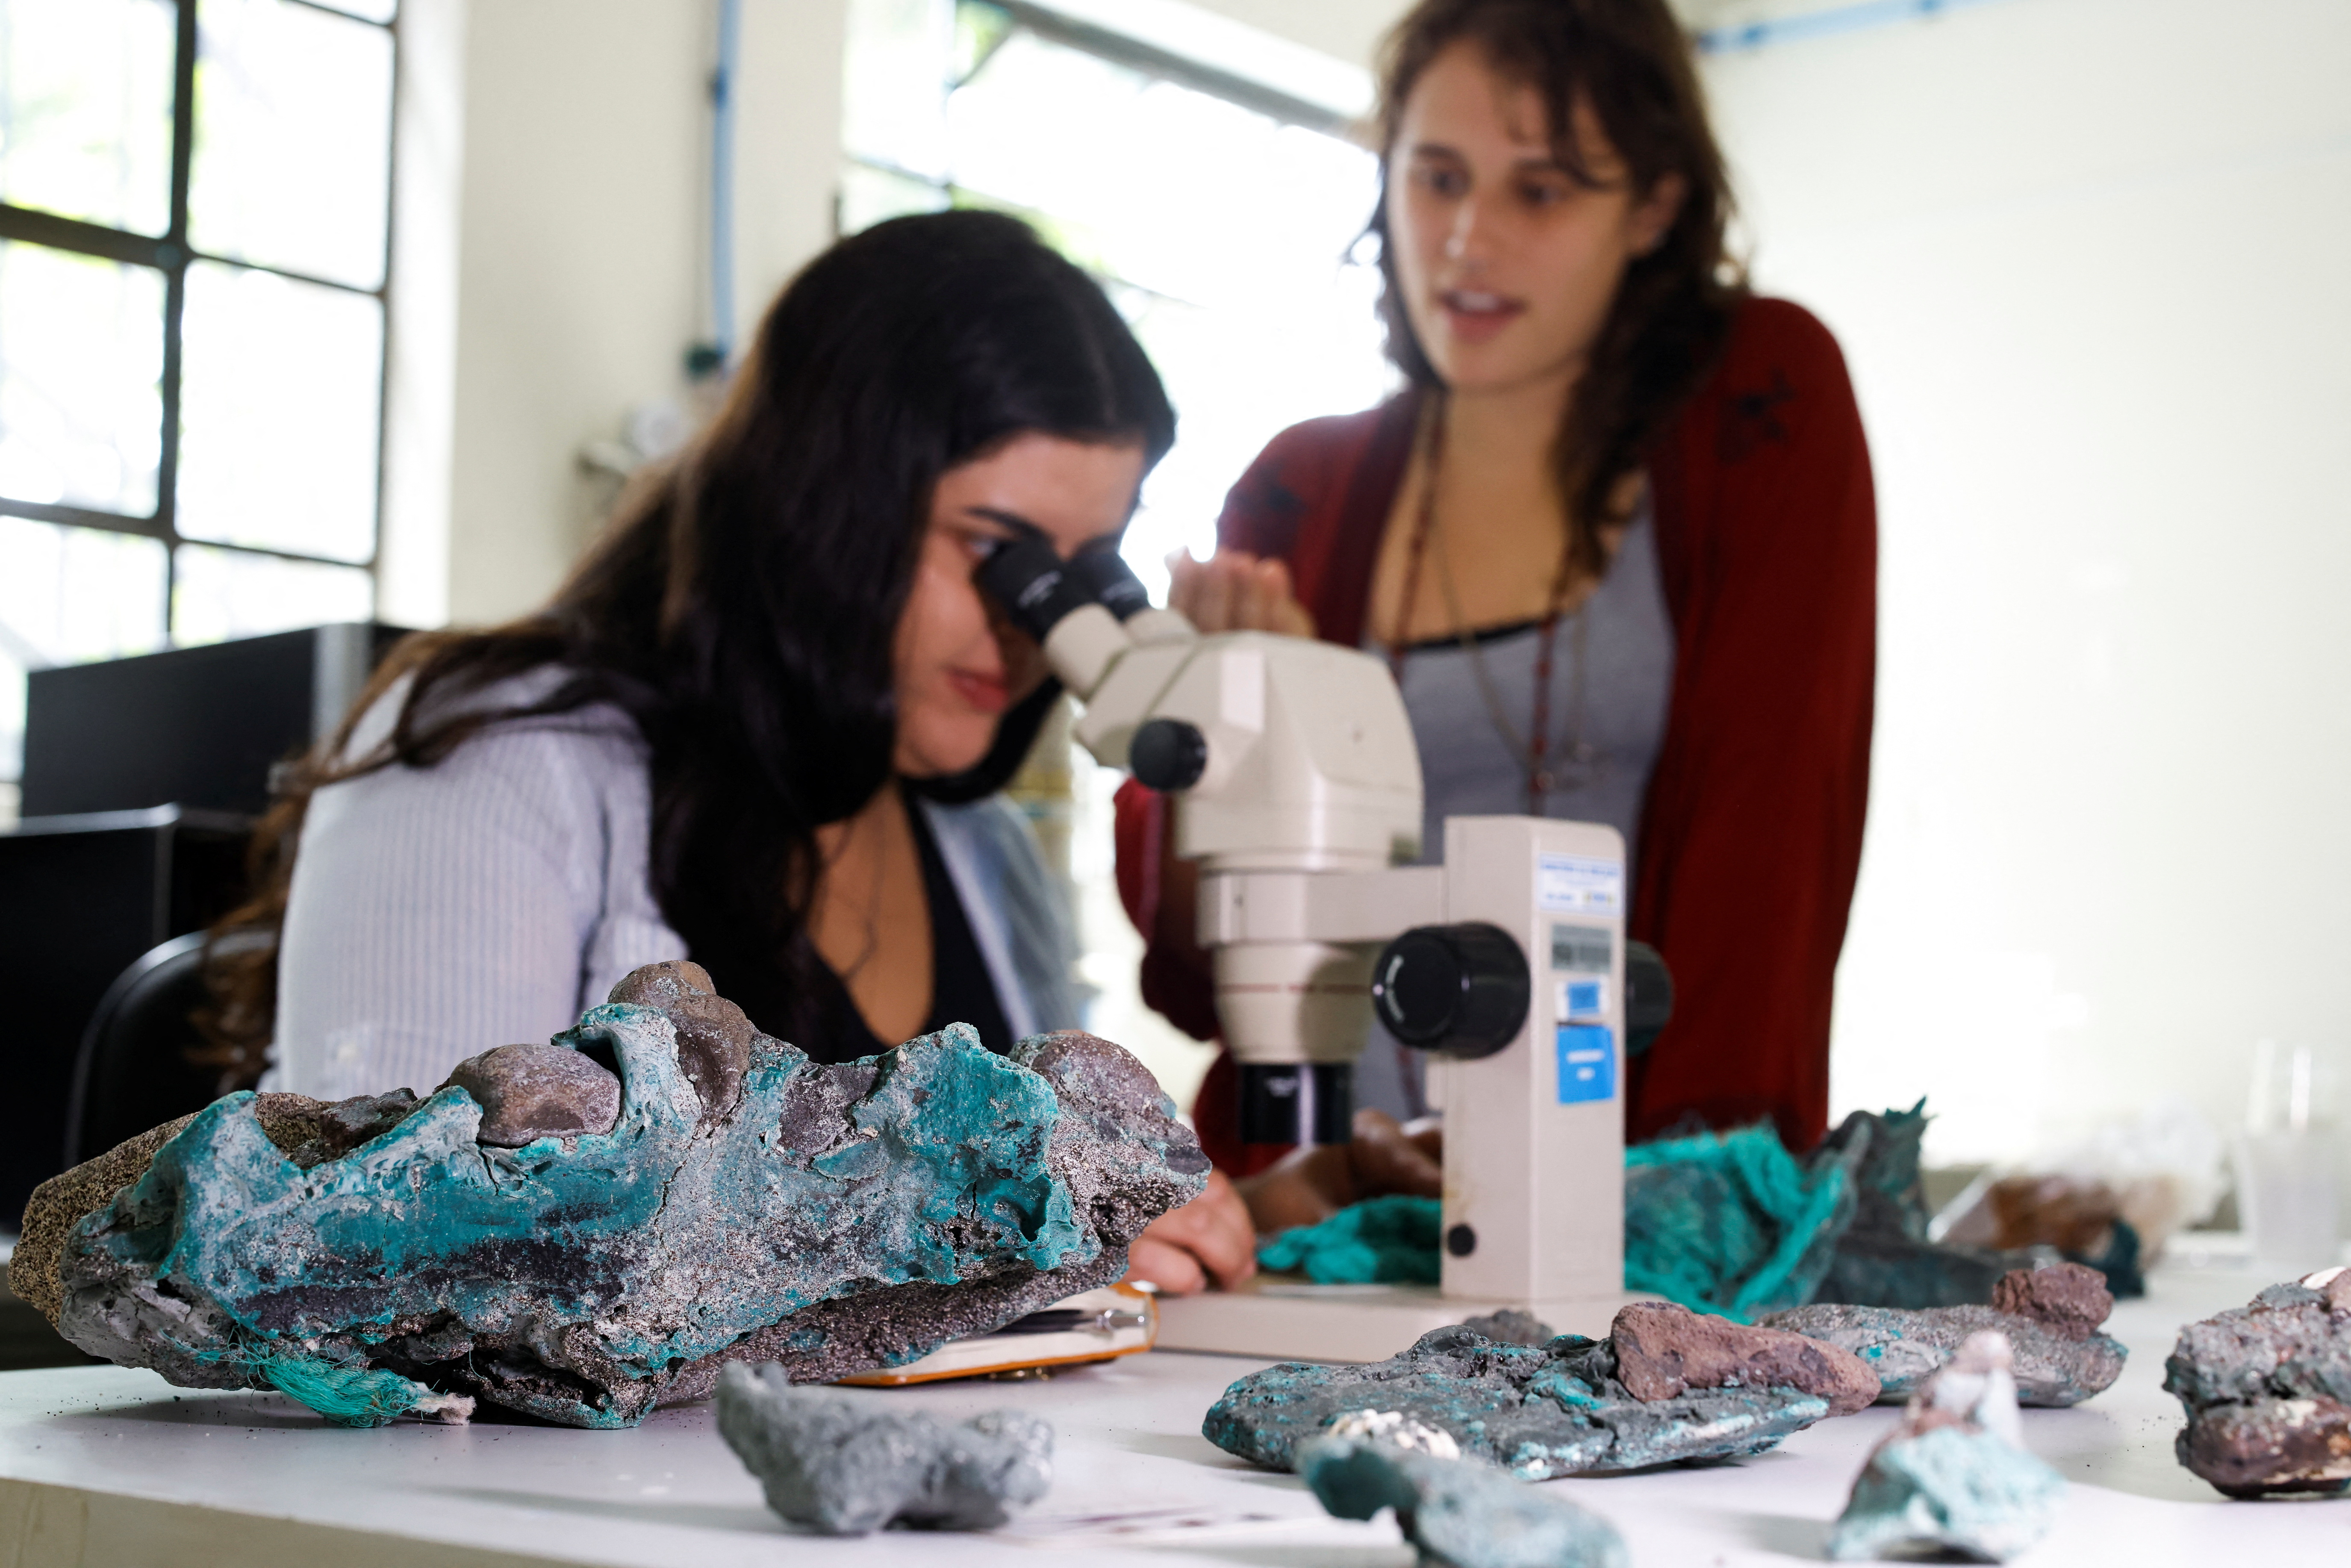 Researcher Fernanda Avelar Santos looks through a microscope at 